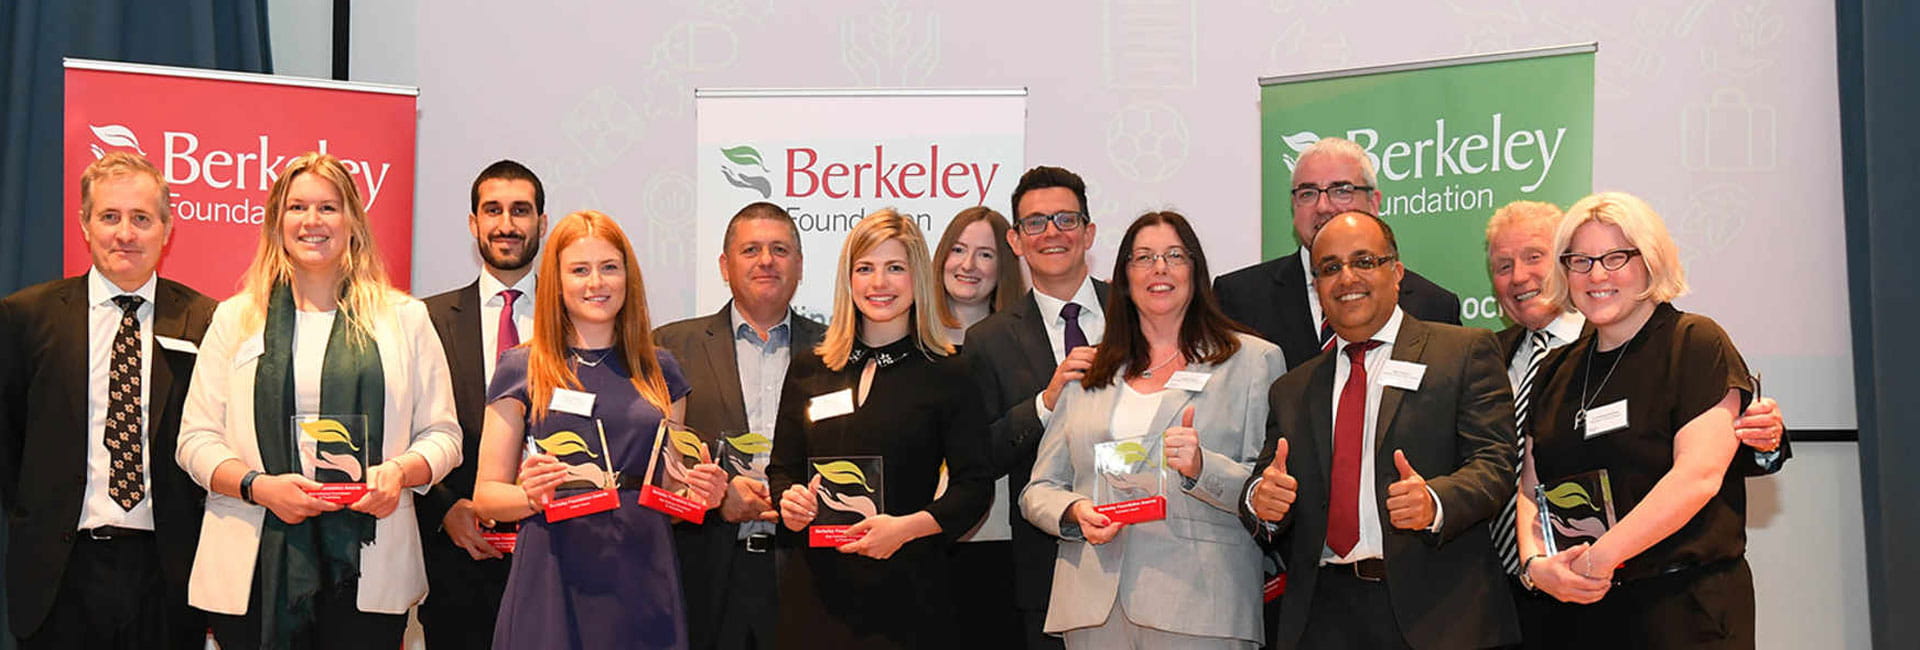 Berkeley Foundation Awards 2019 - winners announced